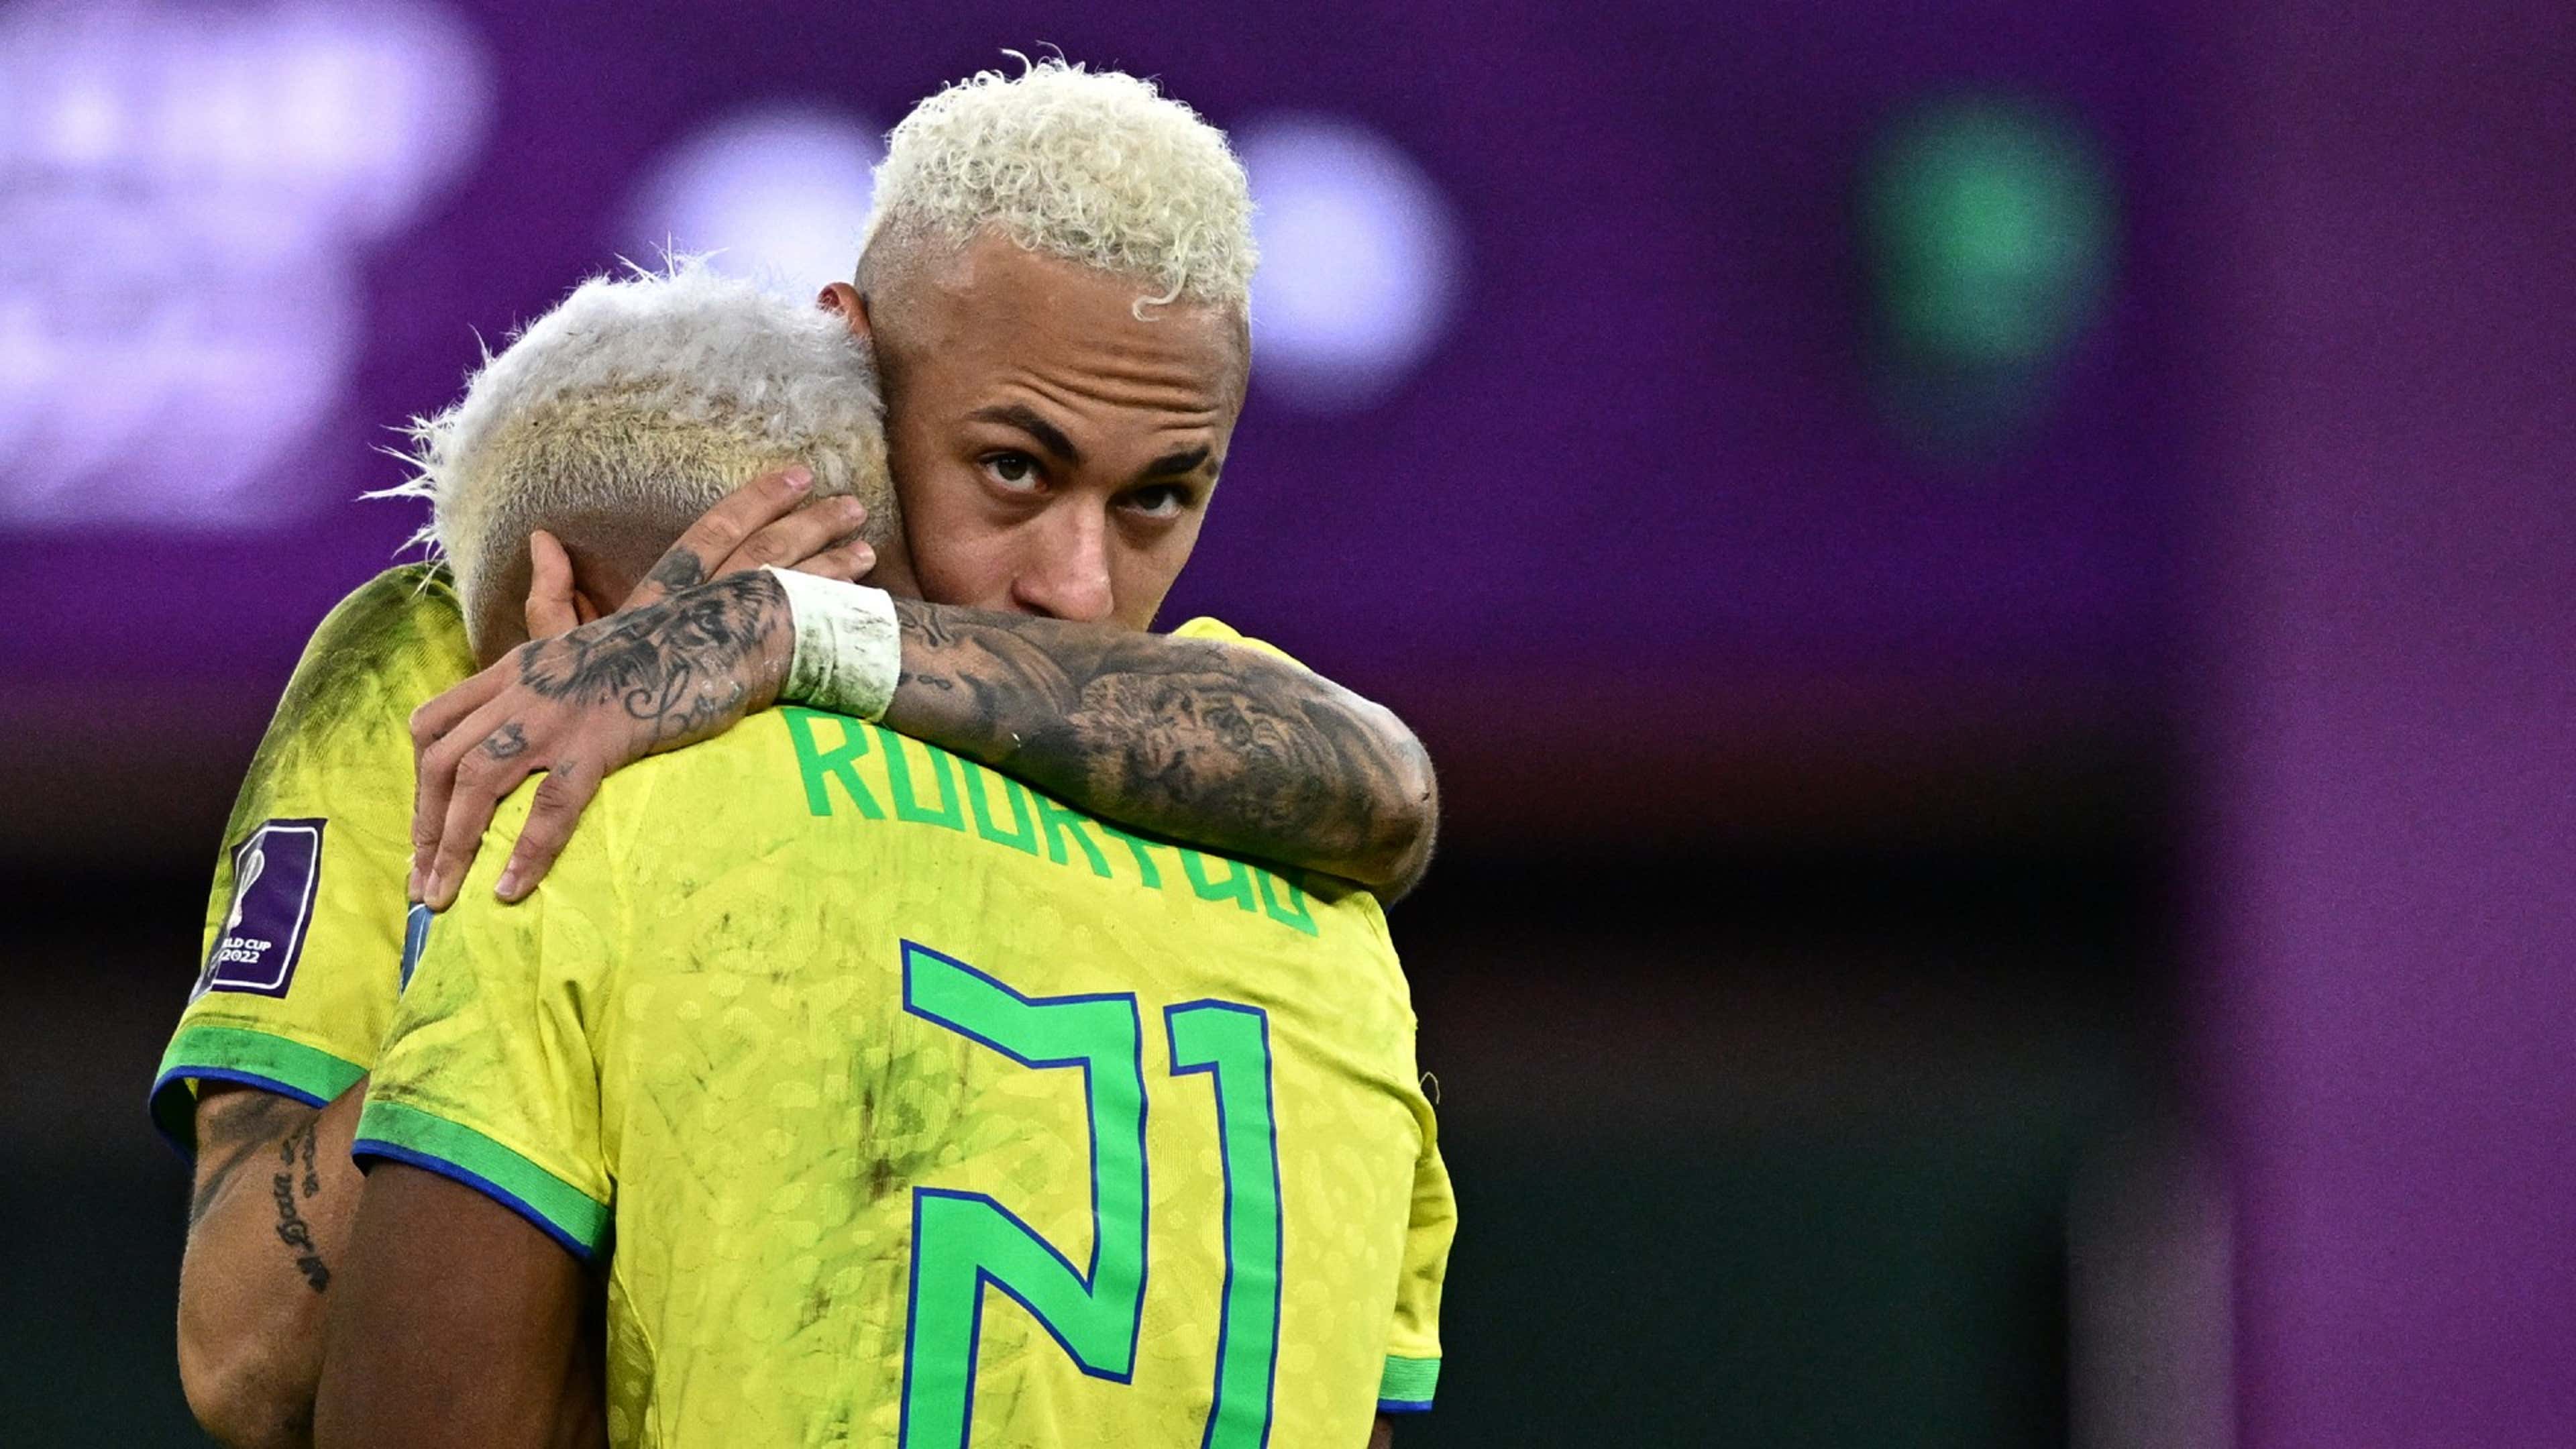 Rodrygo Neymar Brazil World Cup 2022